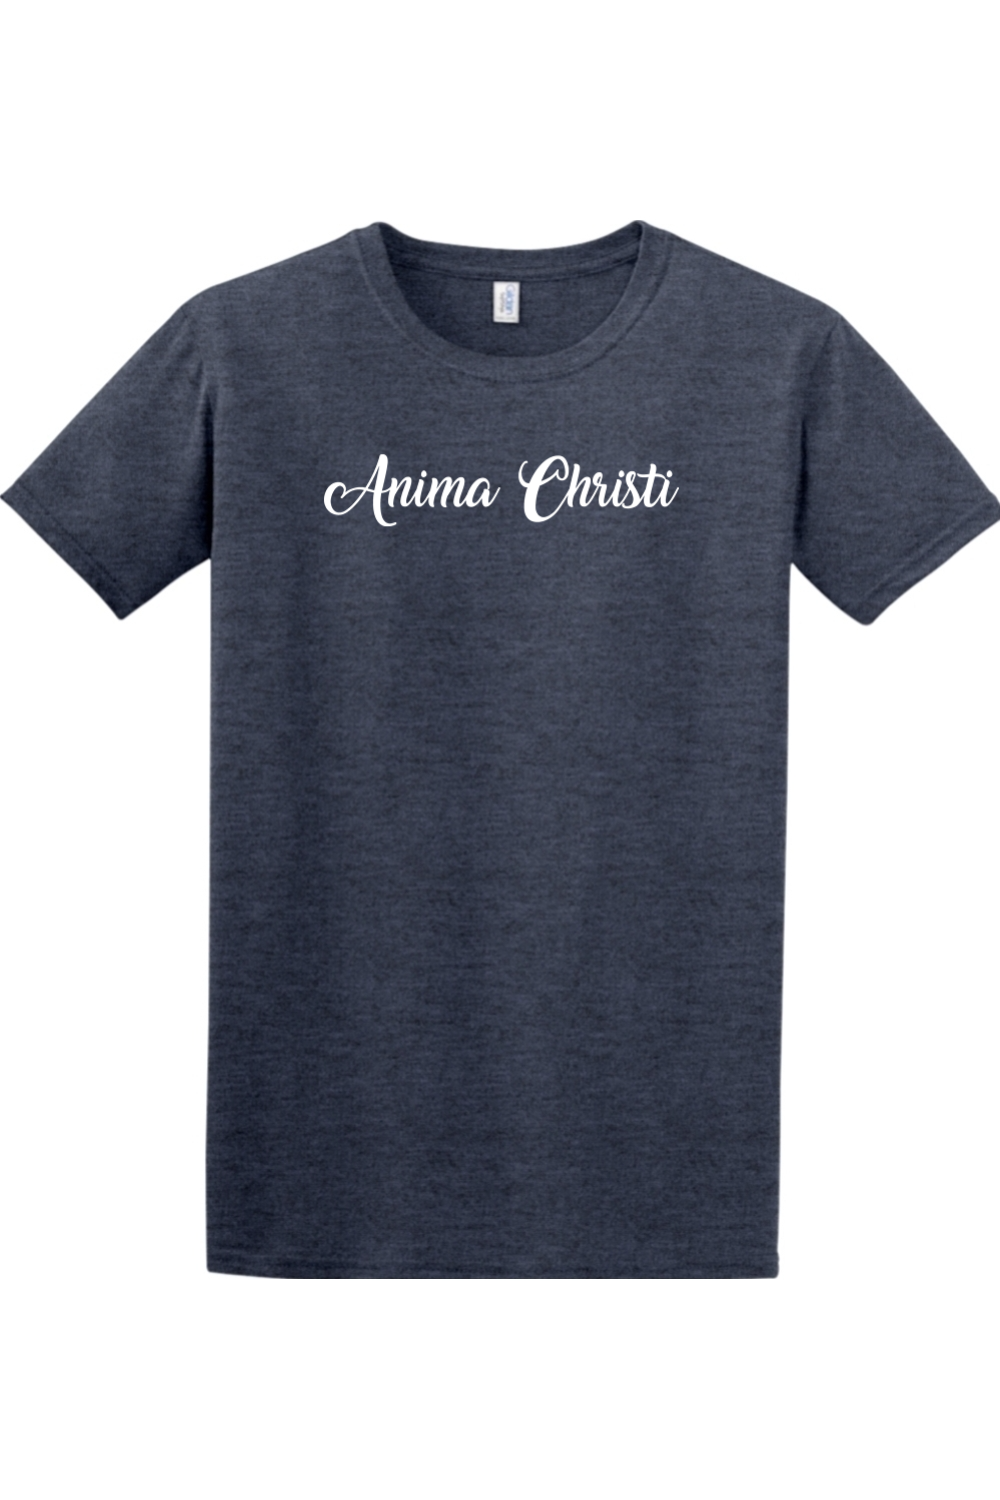 Anima Christi T-shirt - script